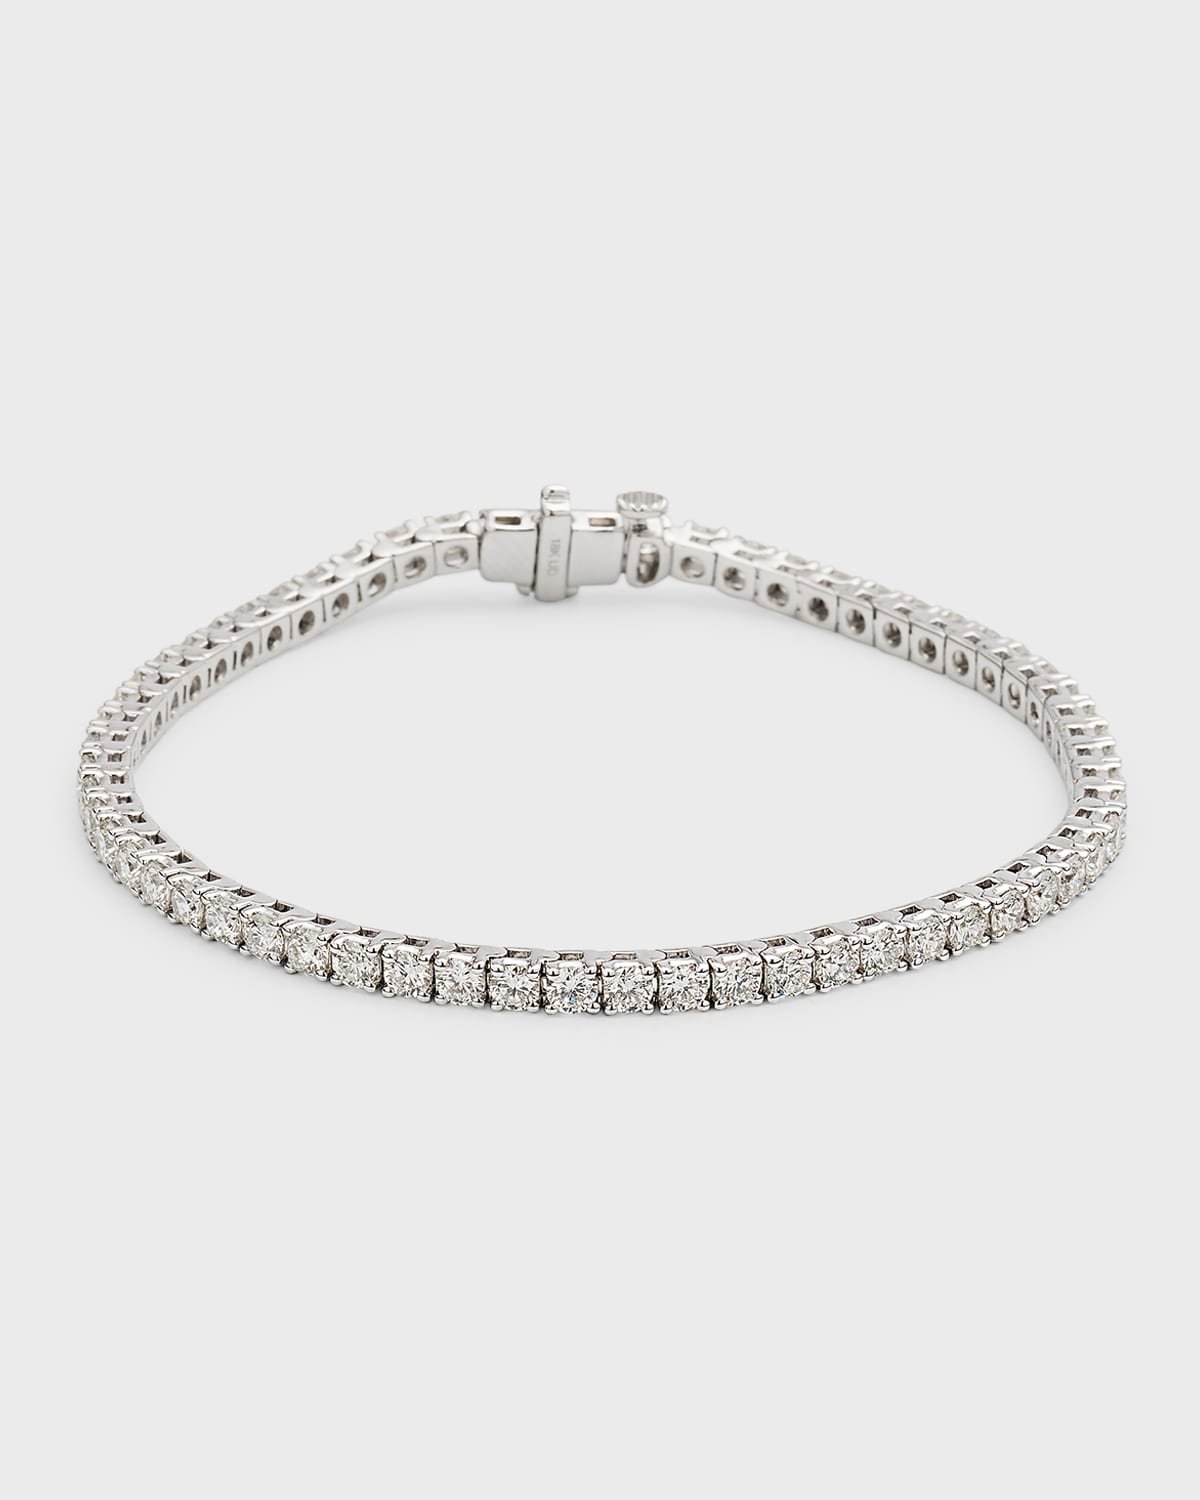 Neiman Marcus Diamonds 18k White Gold Round Diamond Bracelet, 7"l, 5.0tcw